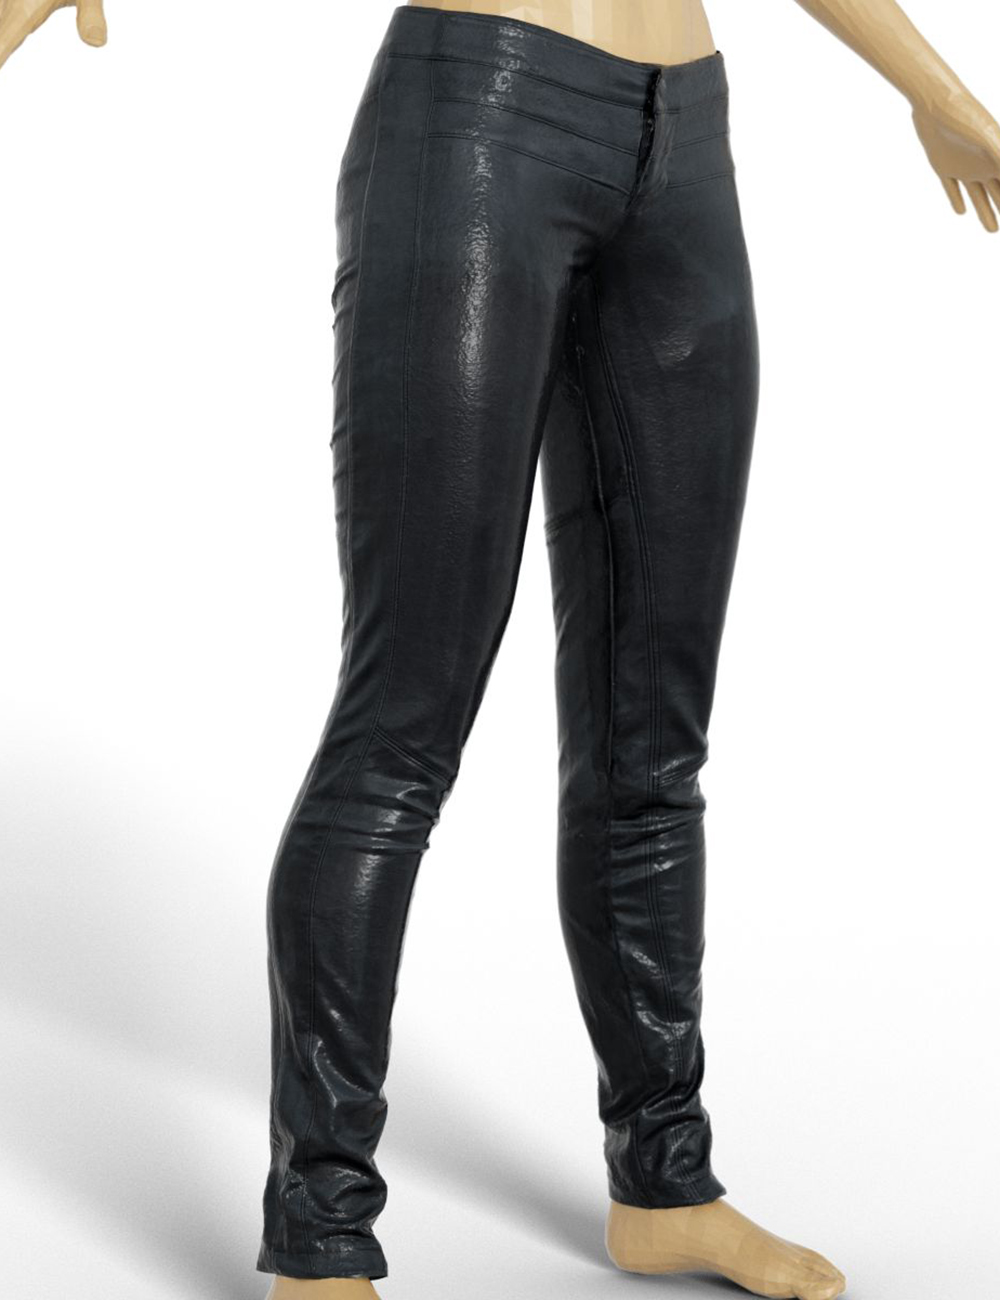 OBJ - Shiny Leather Pants